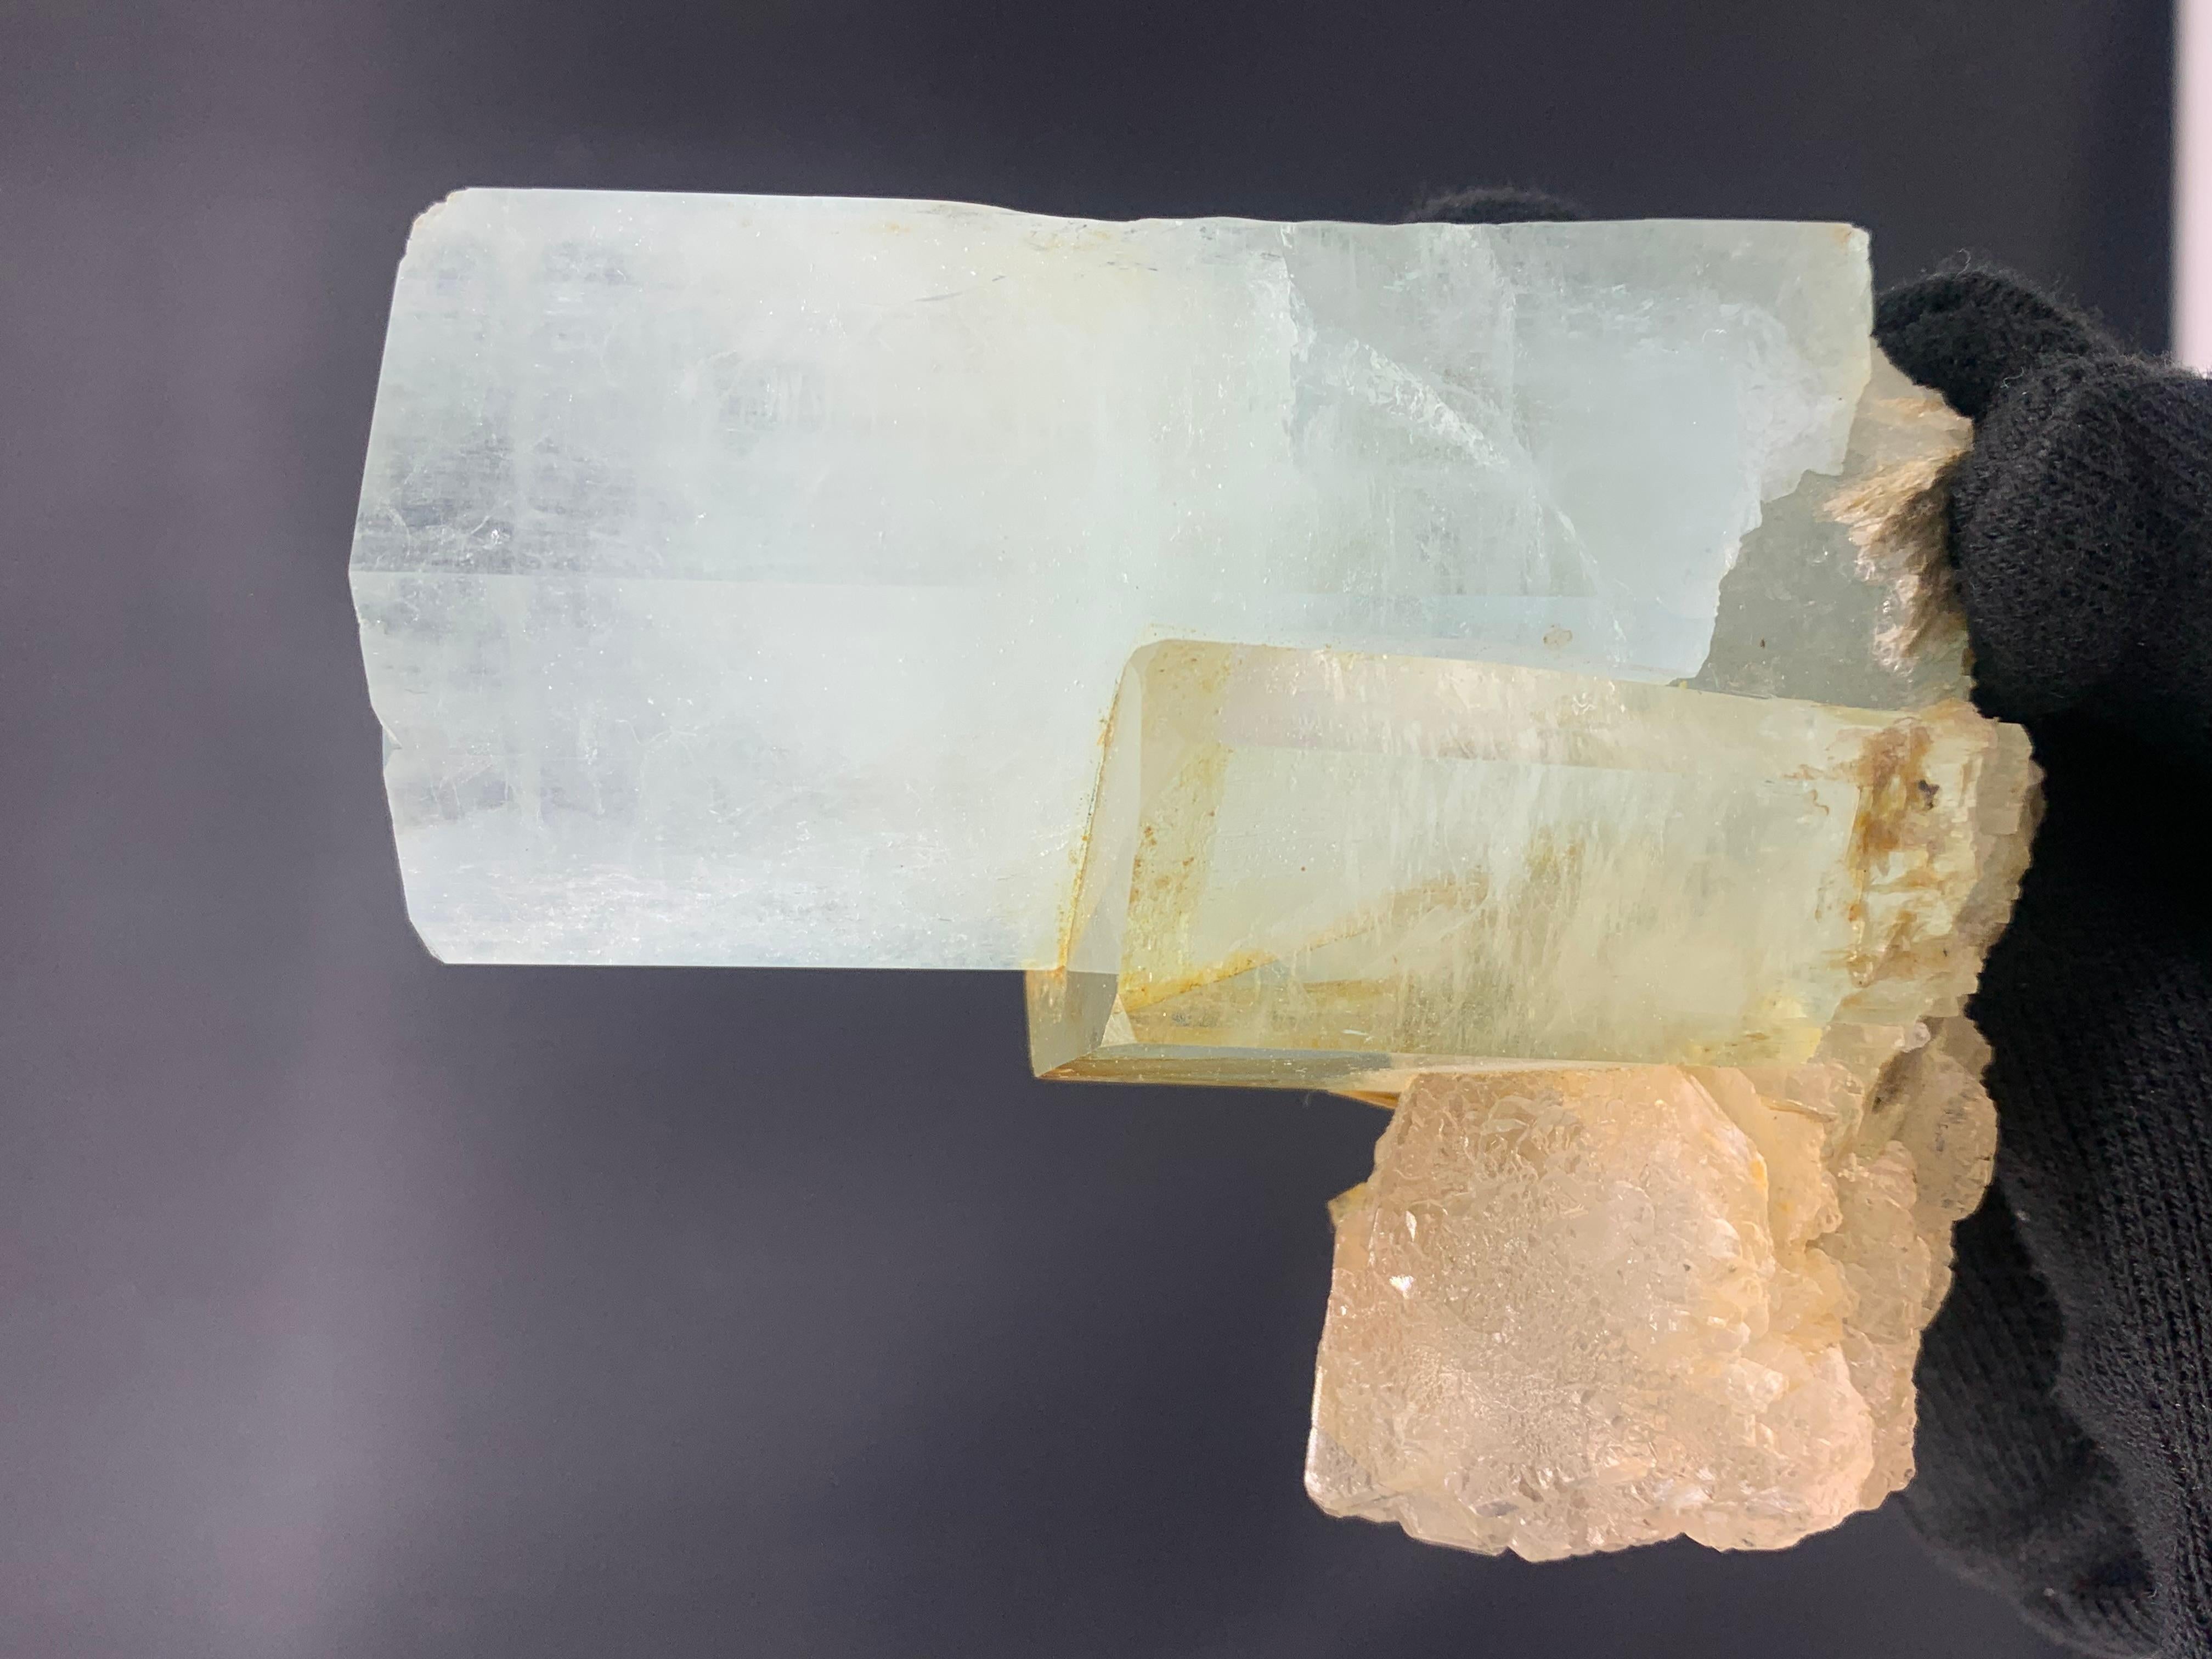 431.5 Gram Aquamarine Crystal bunch Attached With Fluorite From Skardu, Pakistan

Weight: 431.5 Gram 
Dimension: 9 x 7.7 x 5.2 Cm
Origin: Skardu Valley, Pakistan 
Treatment: Fluorite is attached with Adhesive 

Aquamarine is a pale-blue to